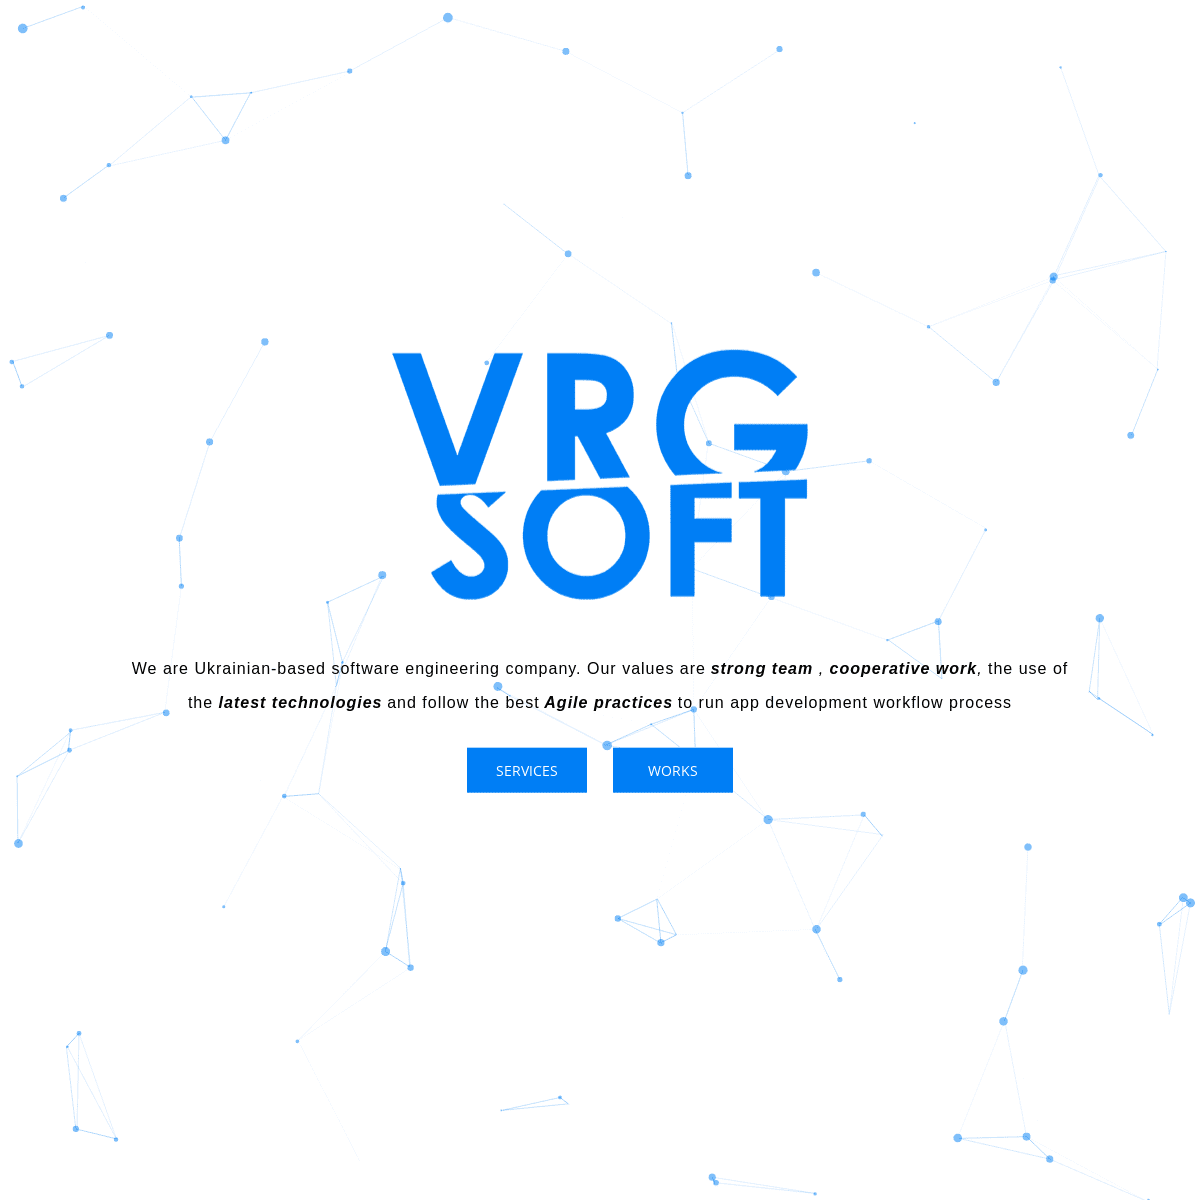 A complete backup of vrgsoft.net